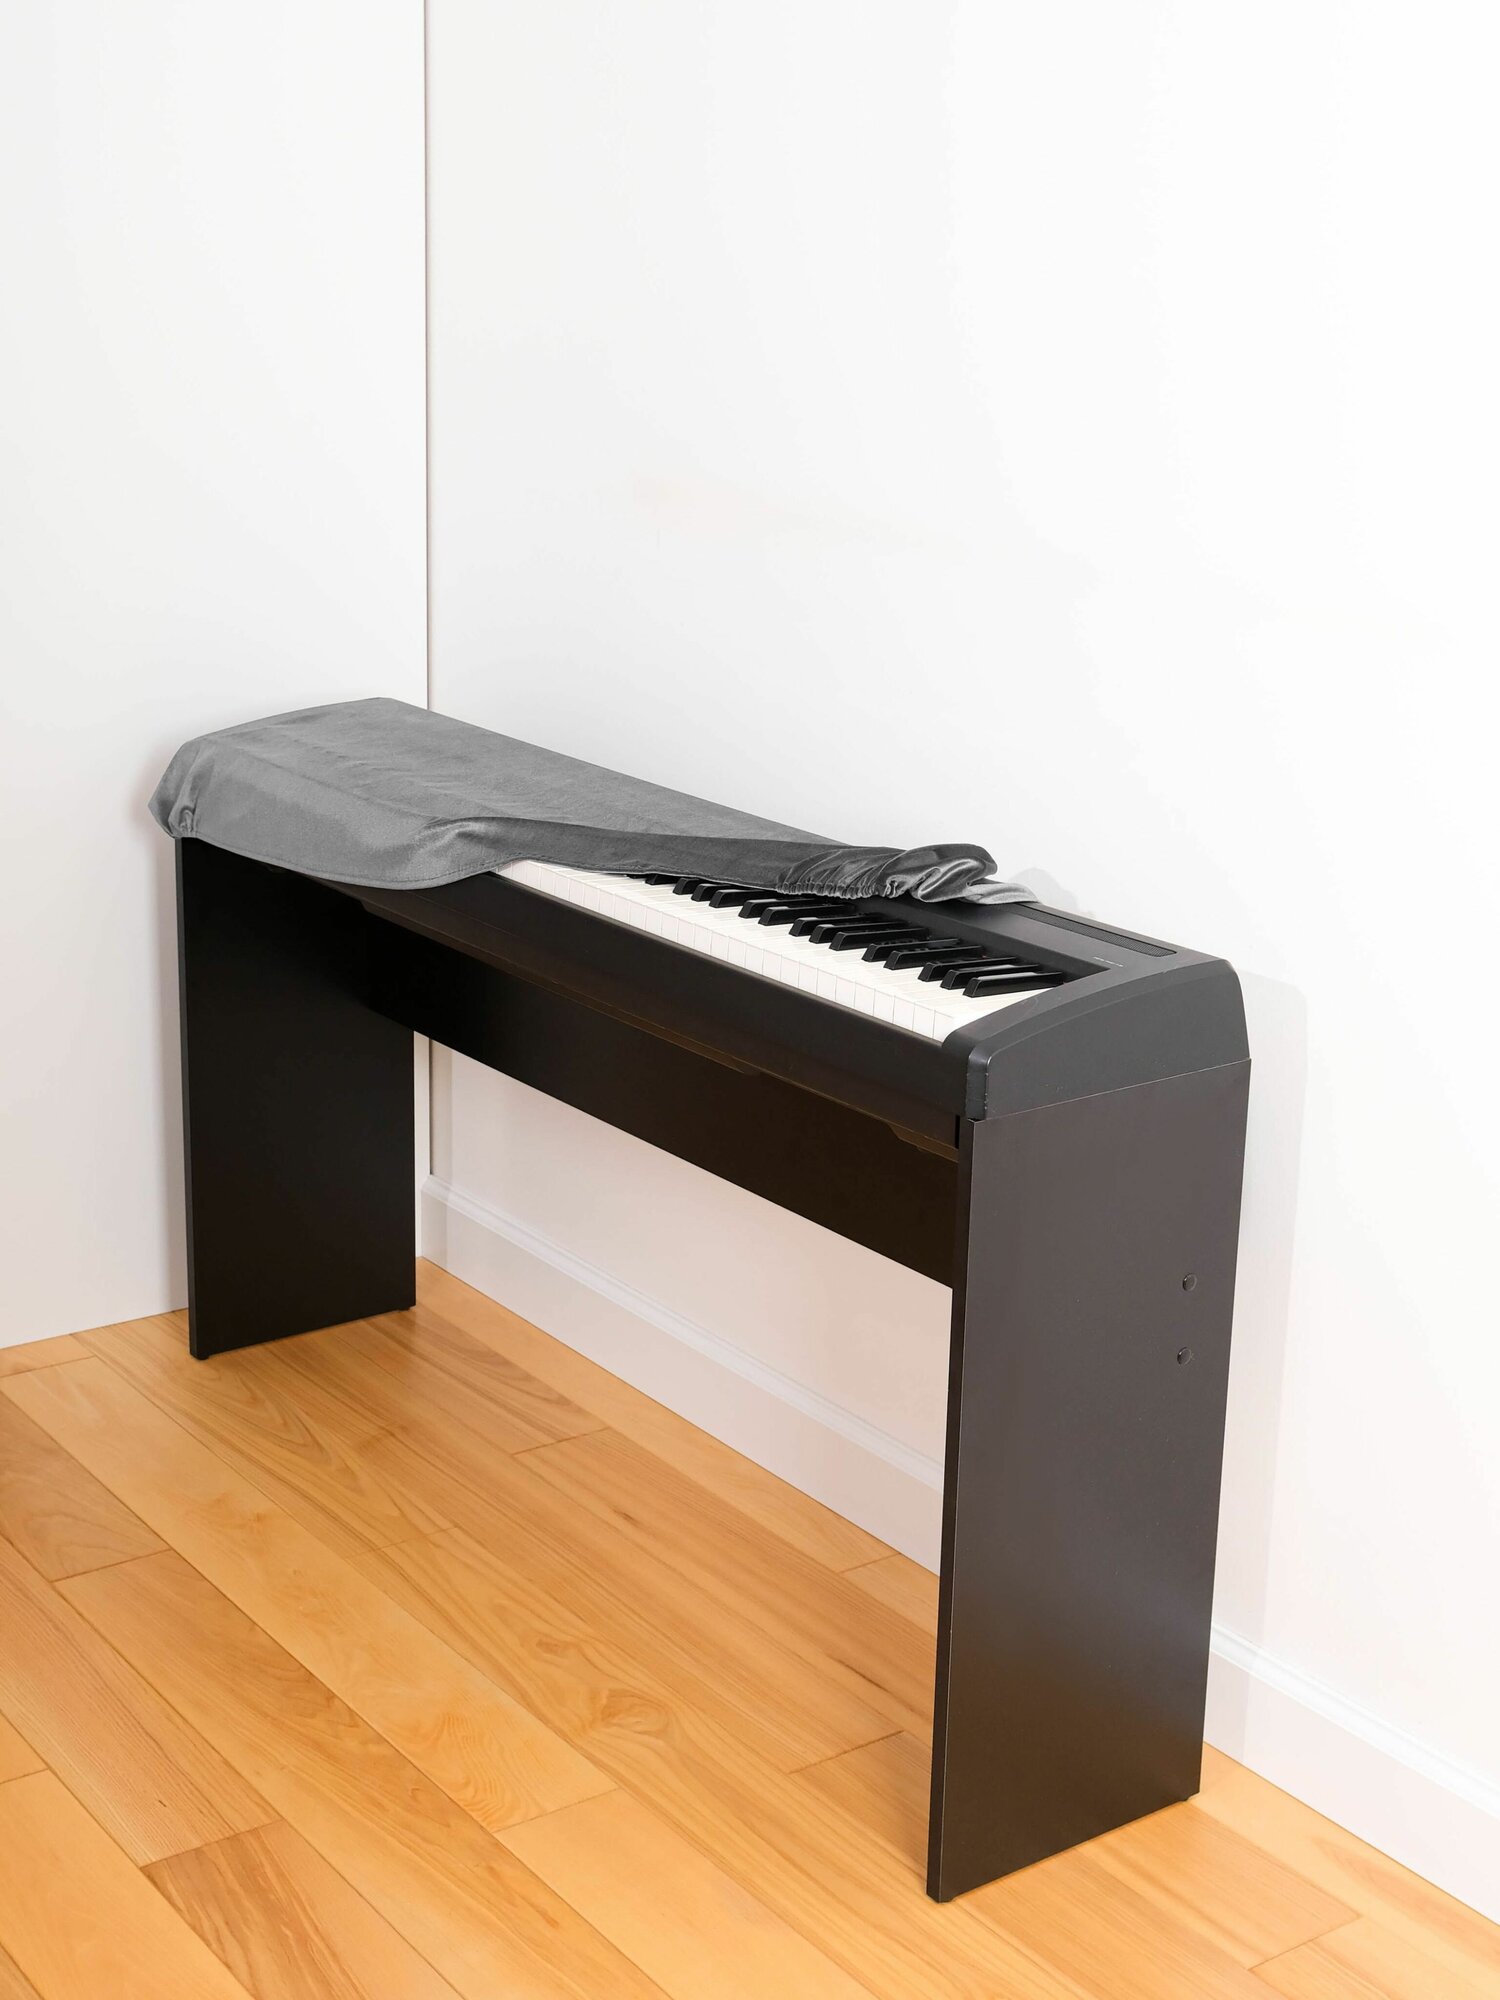 PianoCase - Чехол накидка для цифрового пианино 88 клавиш